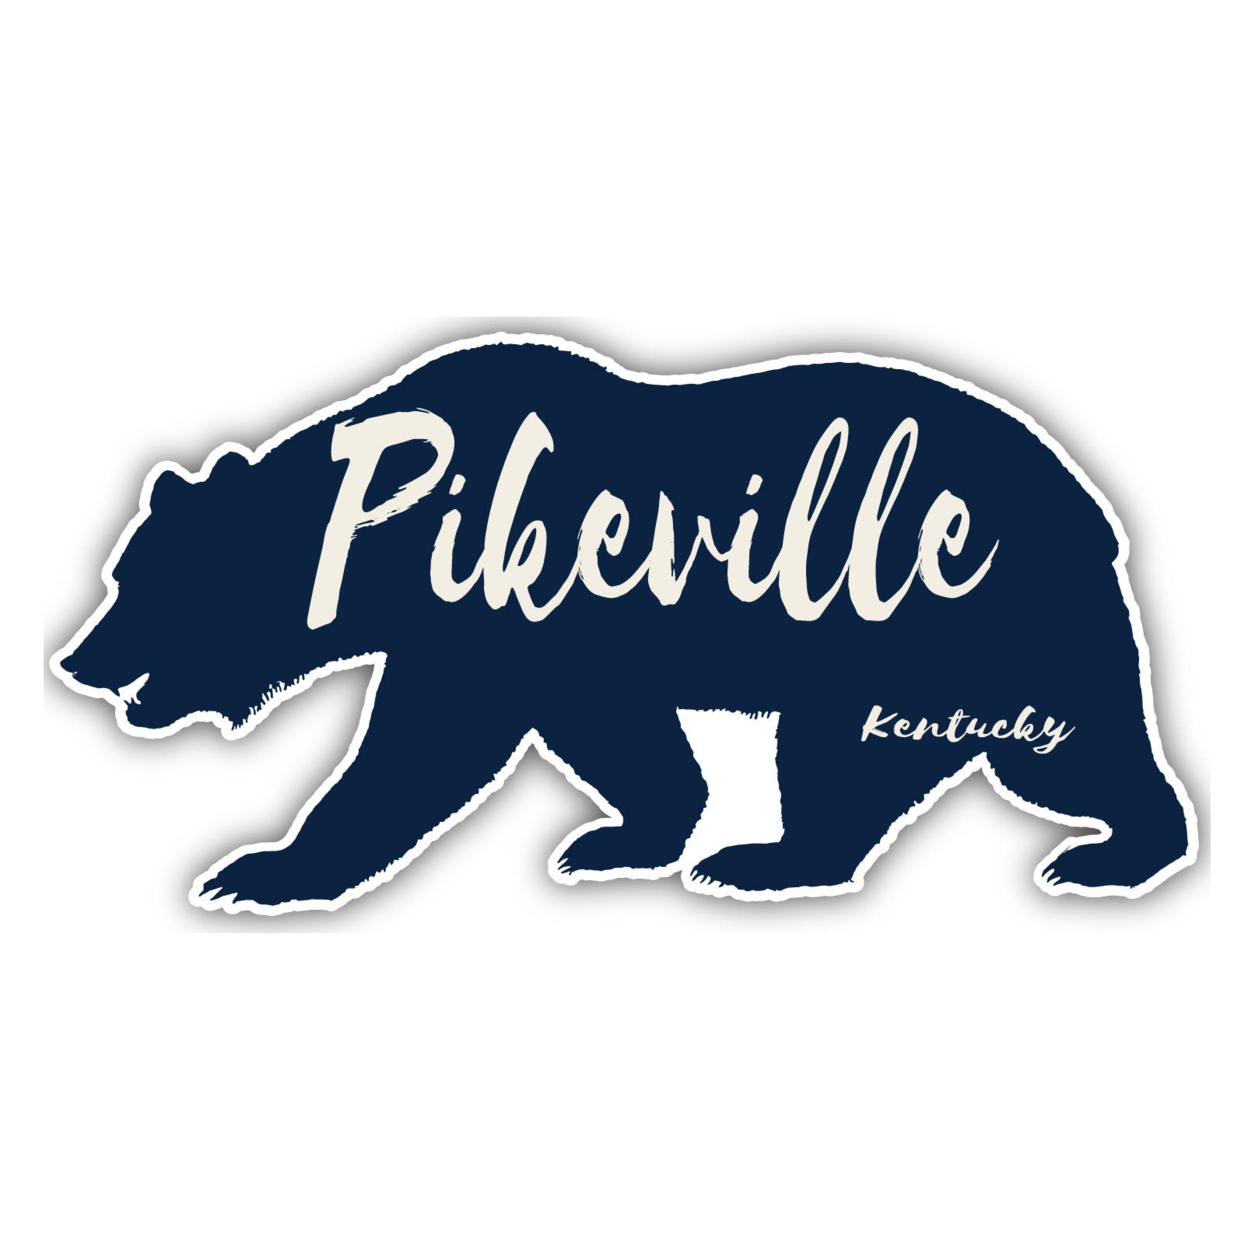 Pikeville Kentucky Souvenir Decorative Stickers (Choose Theme And Size) - Single Unit, 4-Inch, Tent